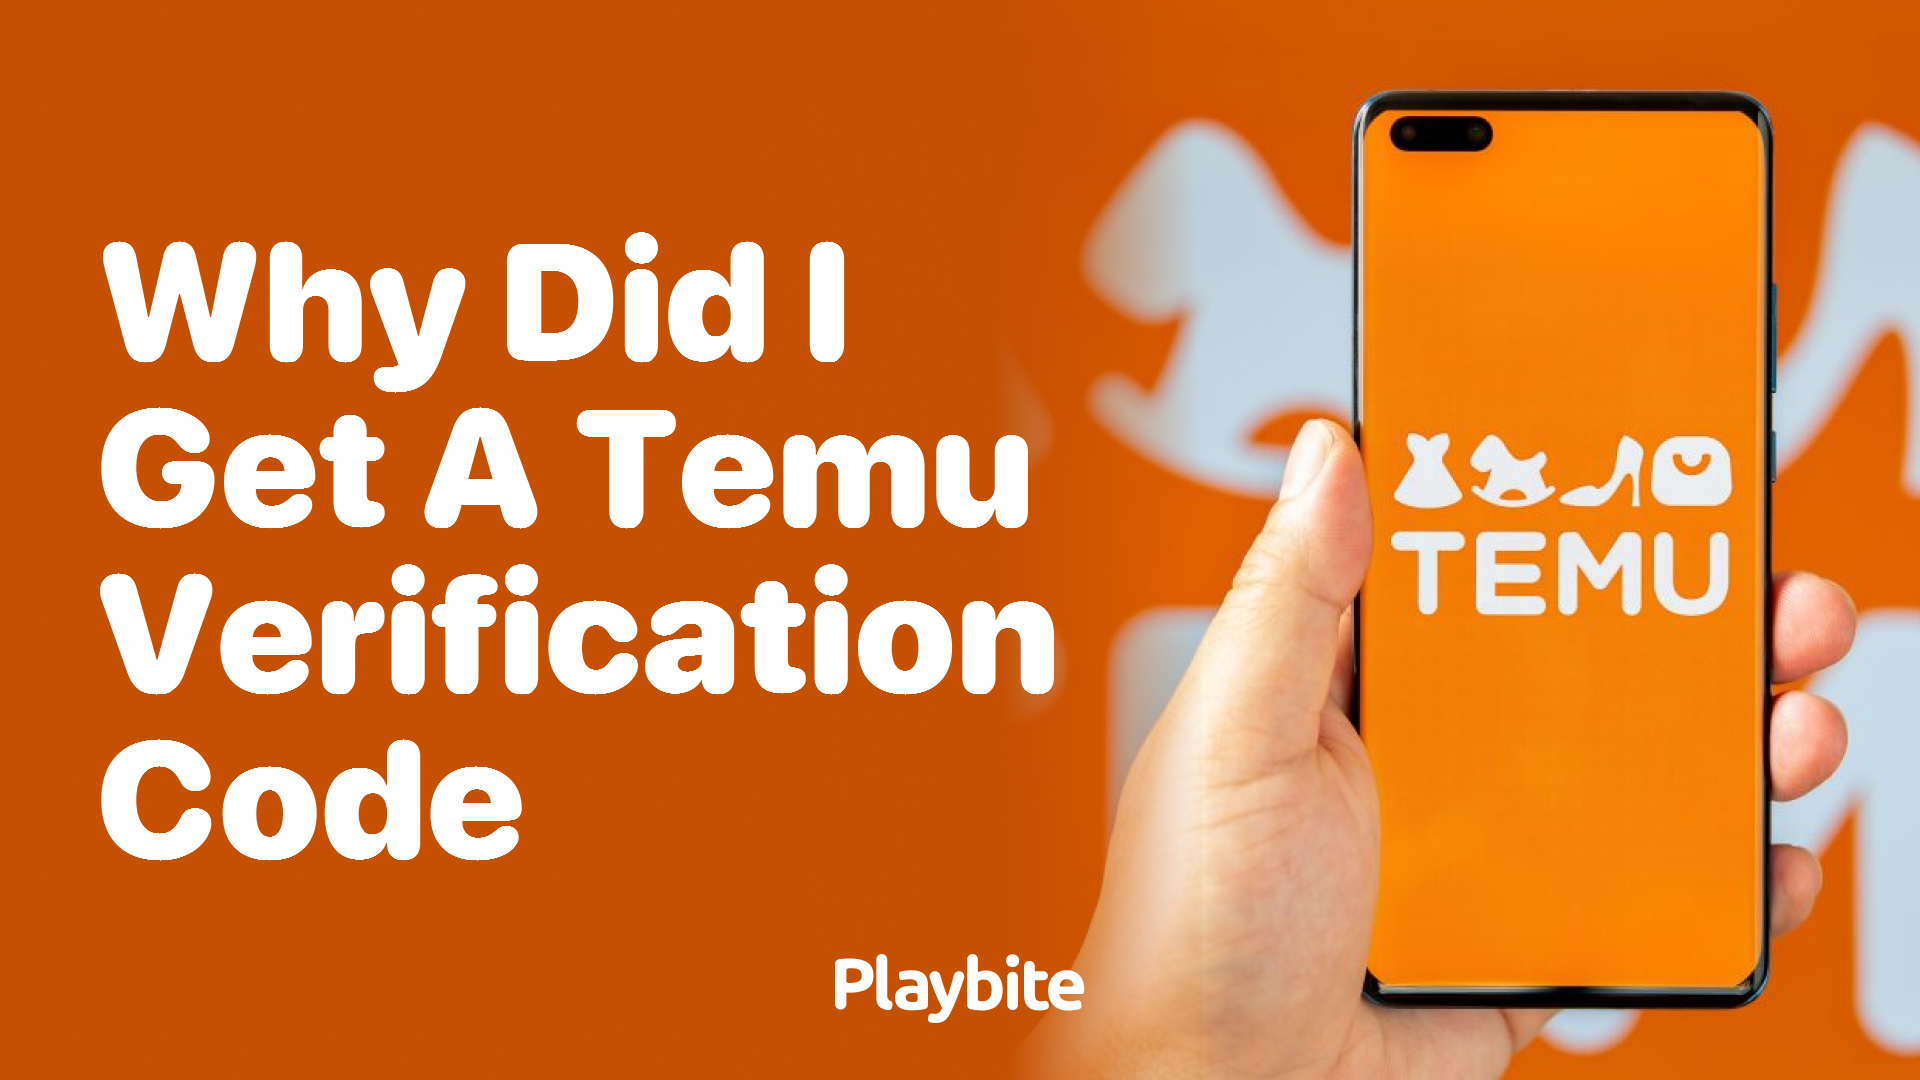 Why Did I Get a Temu Verification Code?